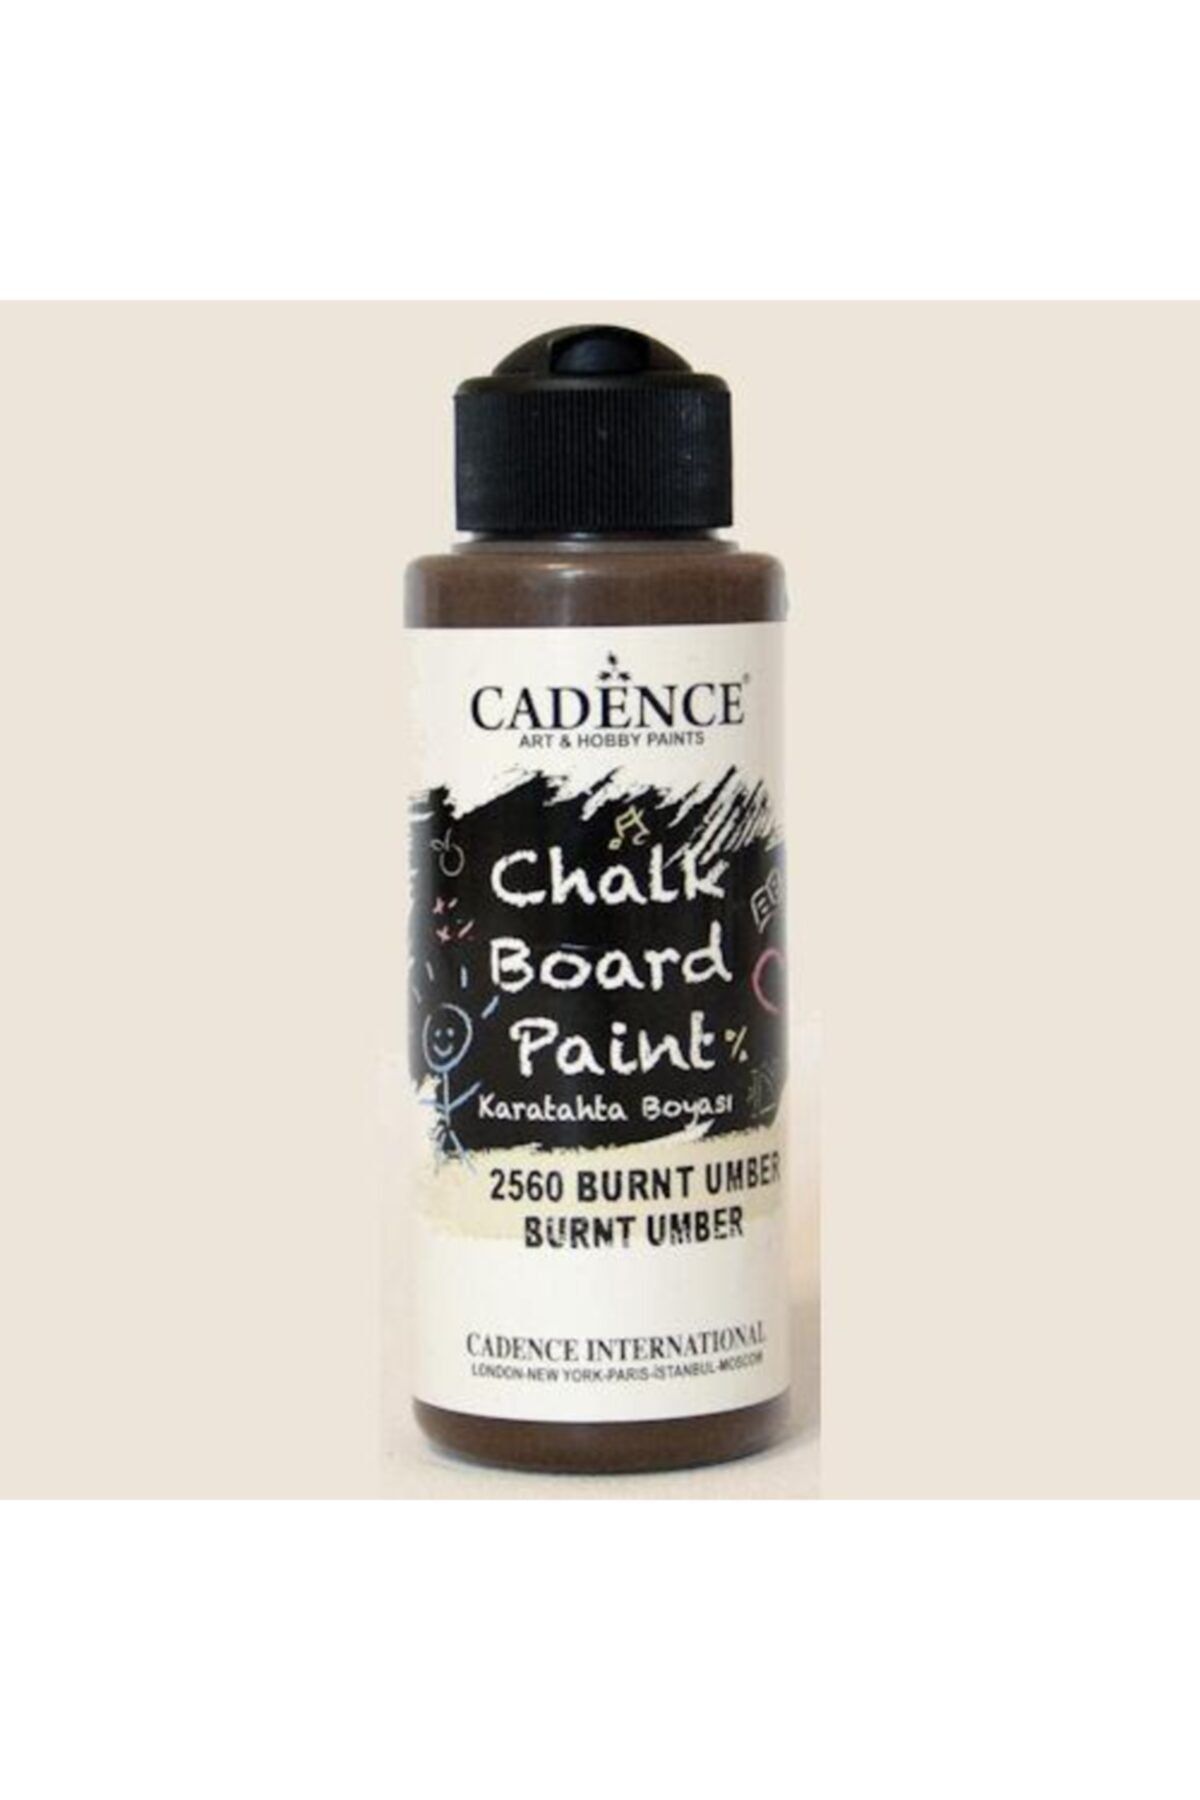 Cadence Chalkboard Paint 120ml Kara Tahta Boyası 2560 Burnt Umber